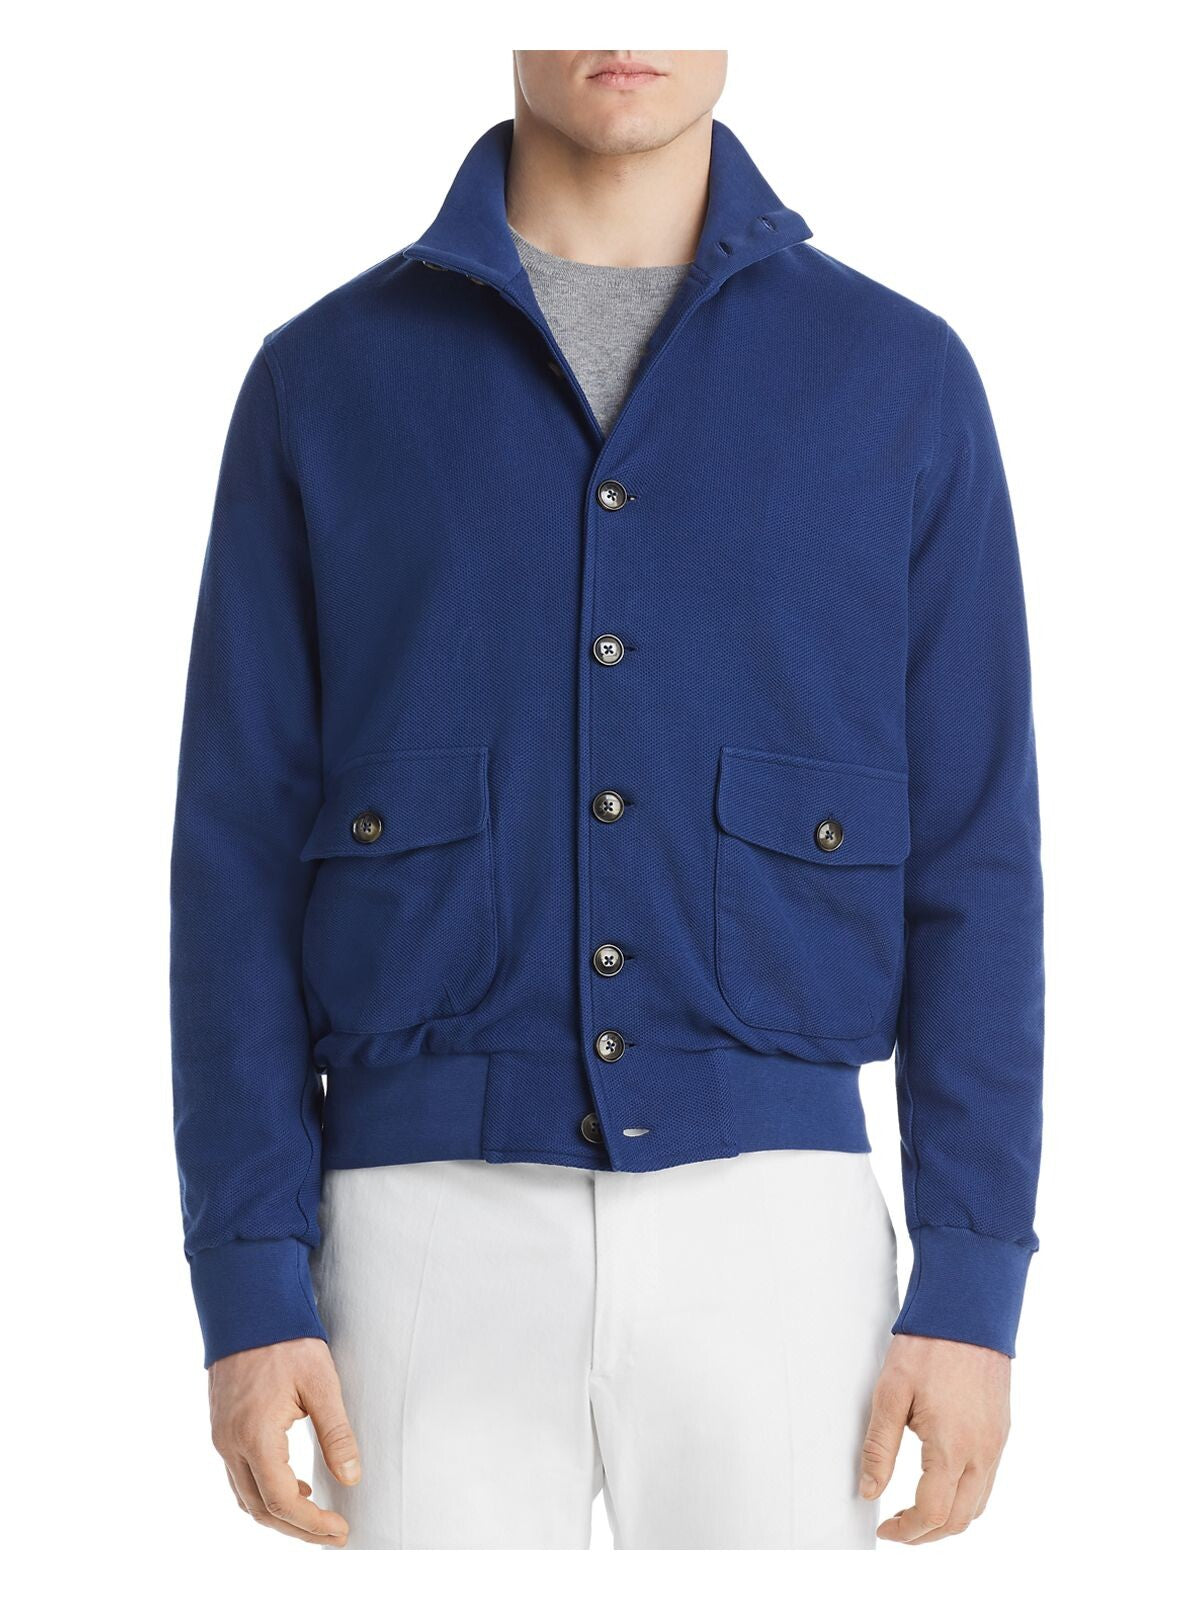 DYLAN GRAY Mens Navy Cotton Button Down Jacket XL